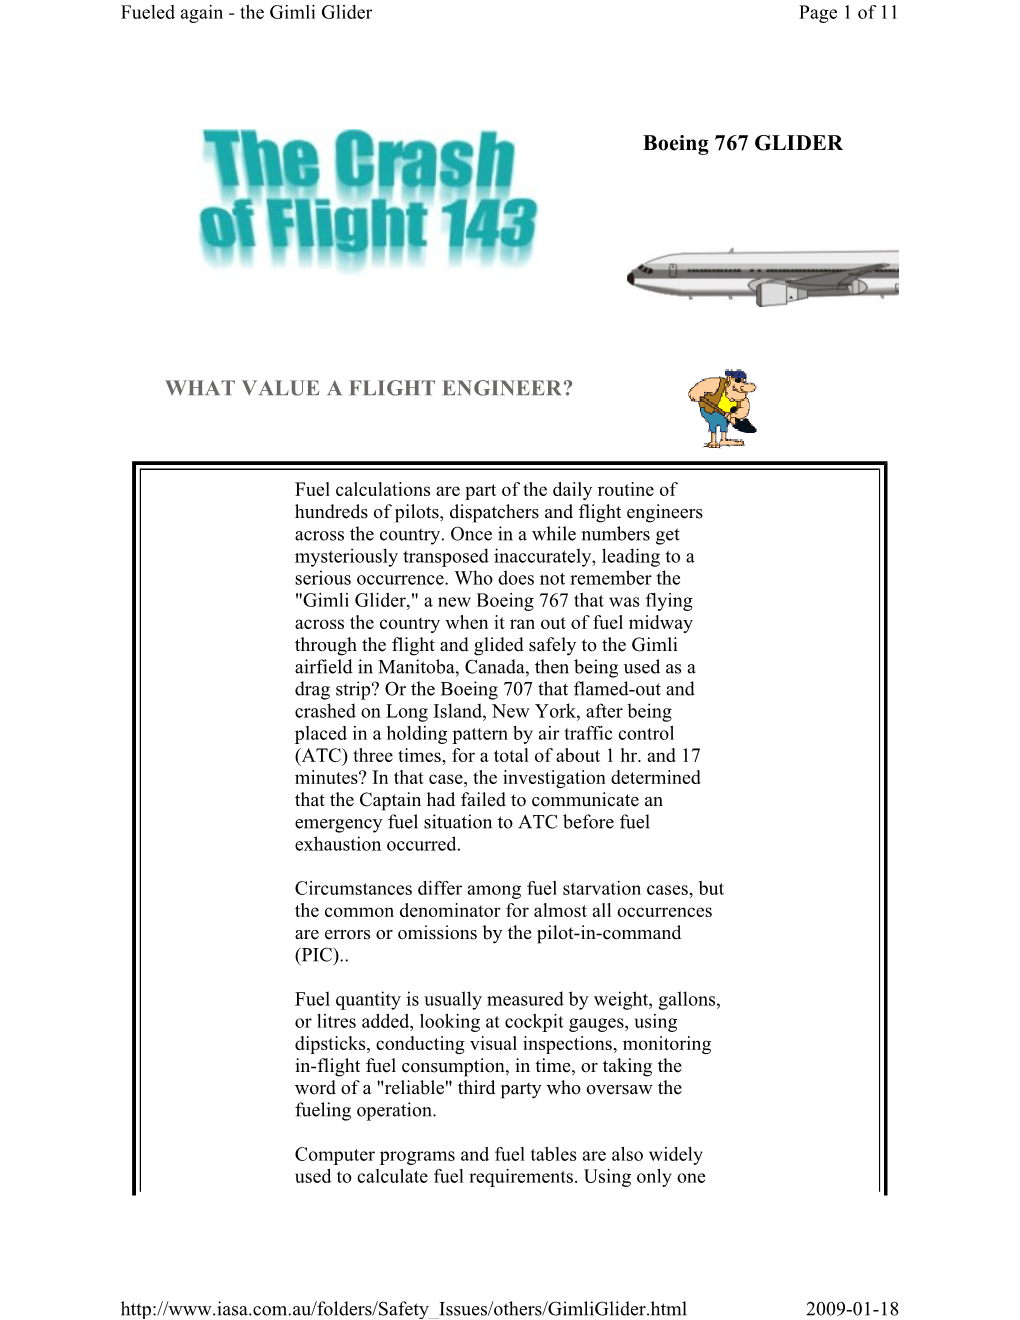 Boeing 767 GLIDER WHAT VALUE a FLIGHT ENGINEER?